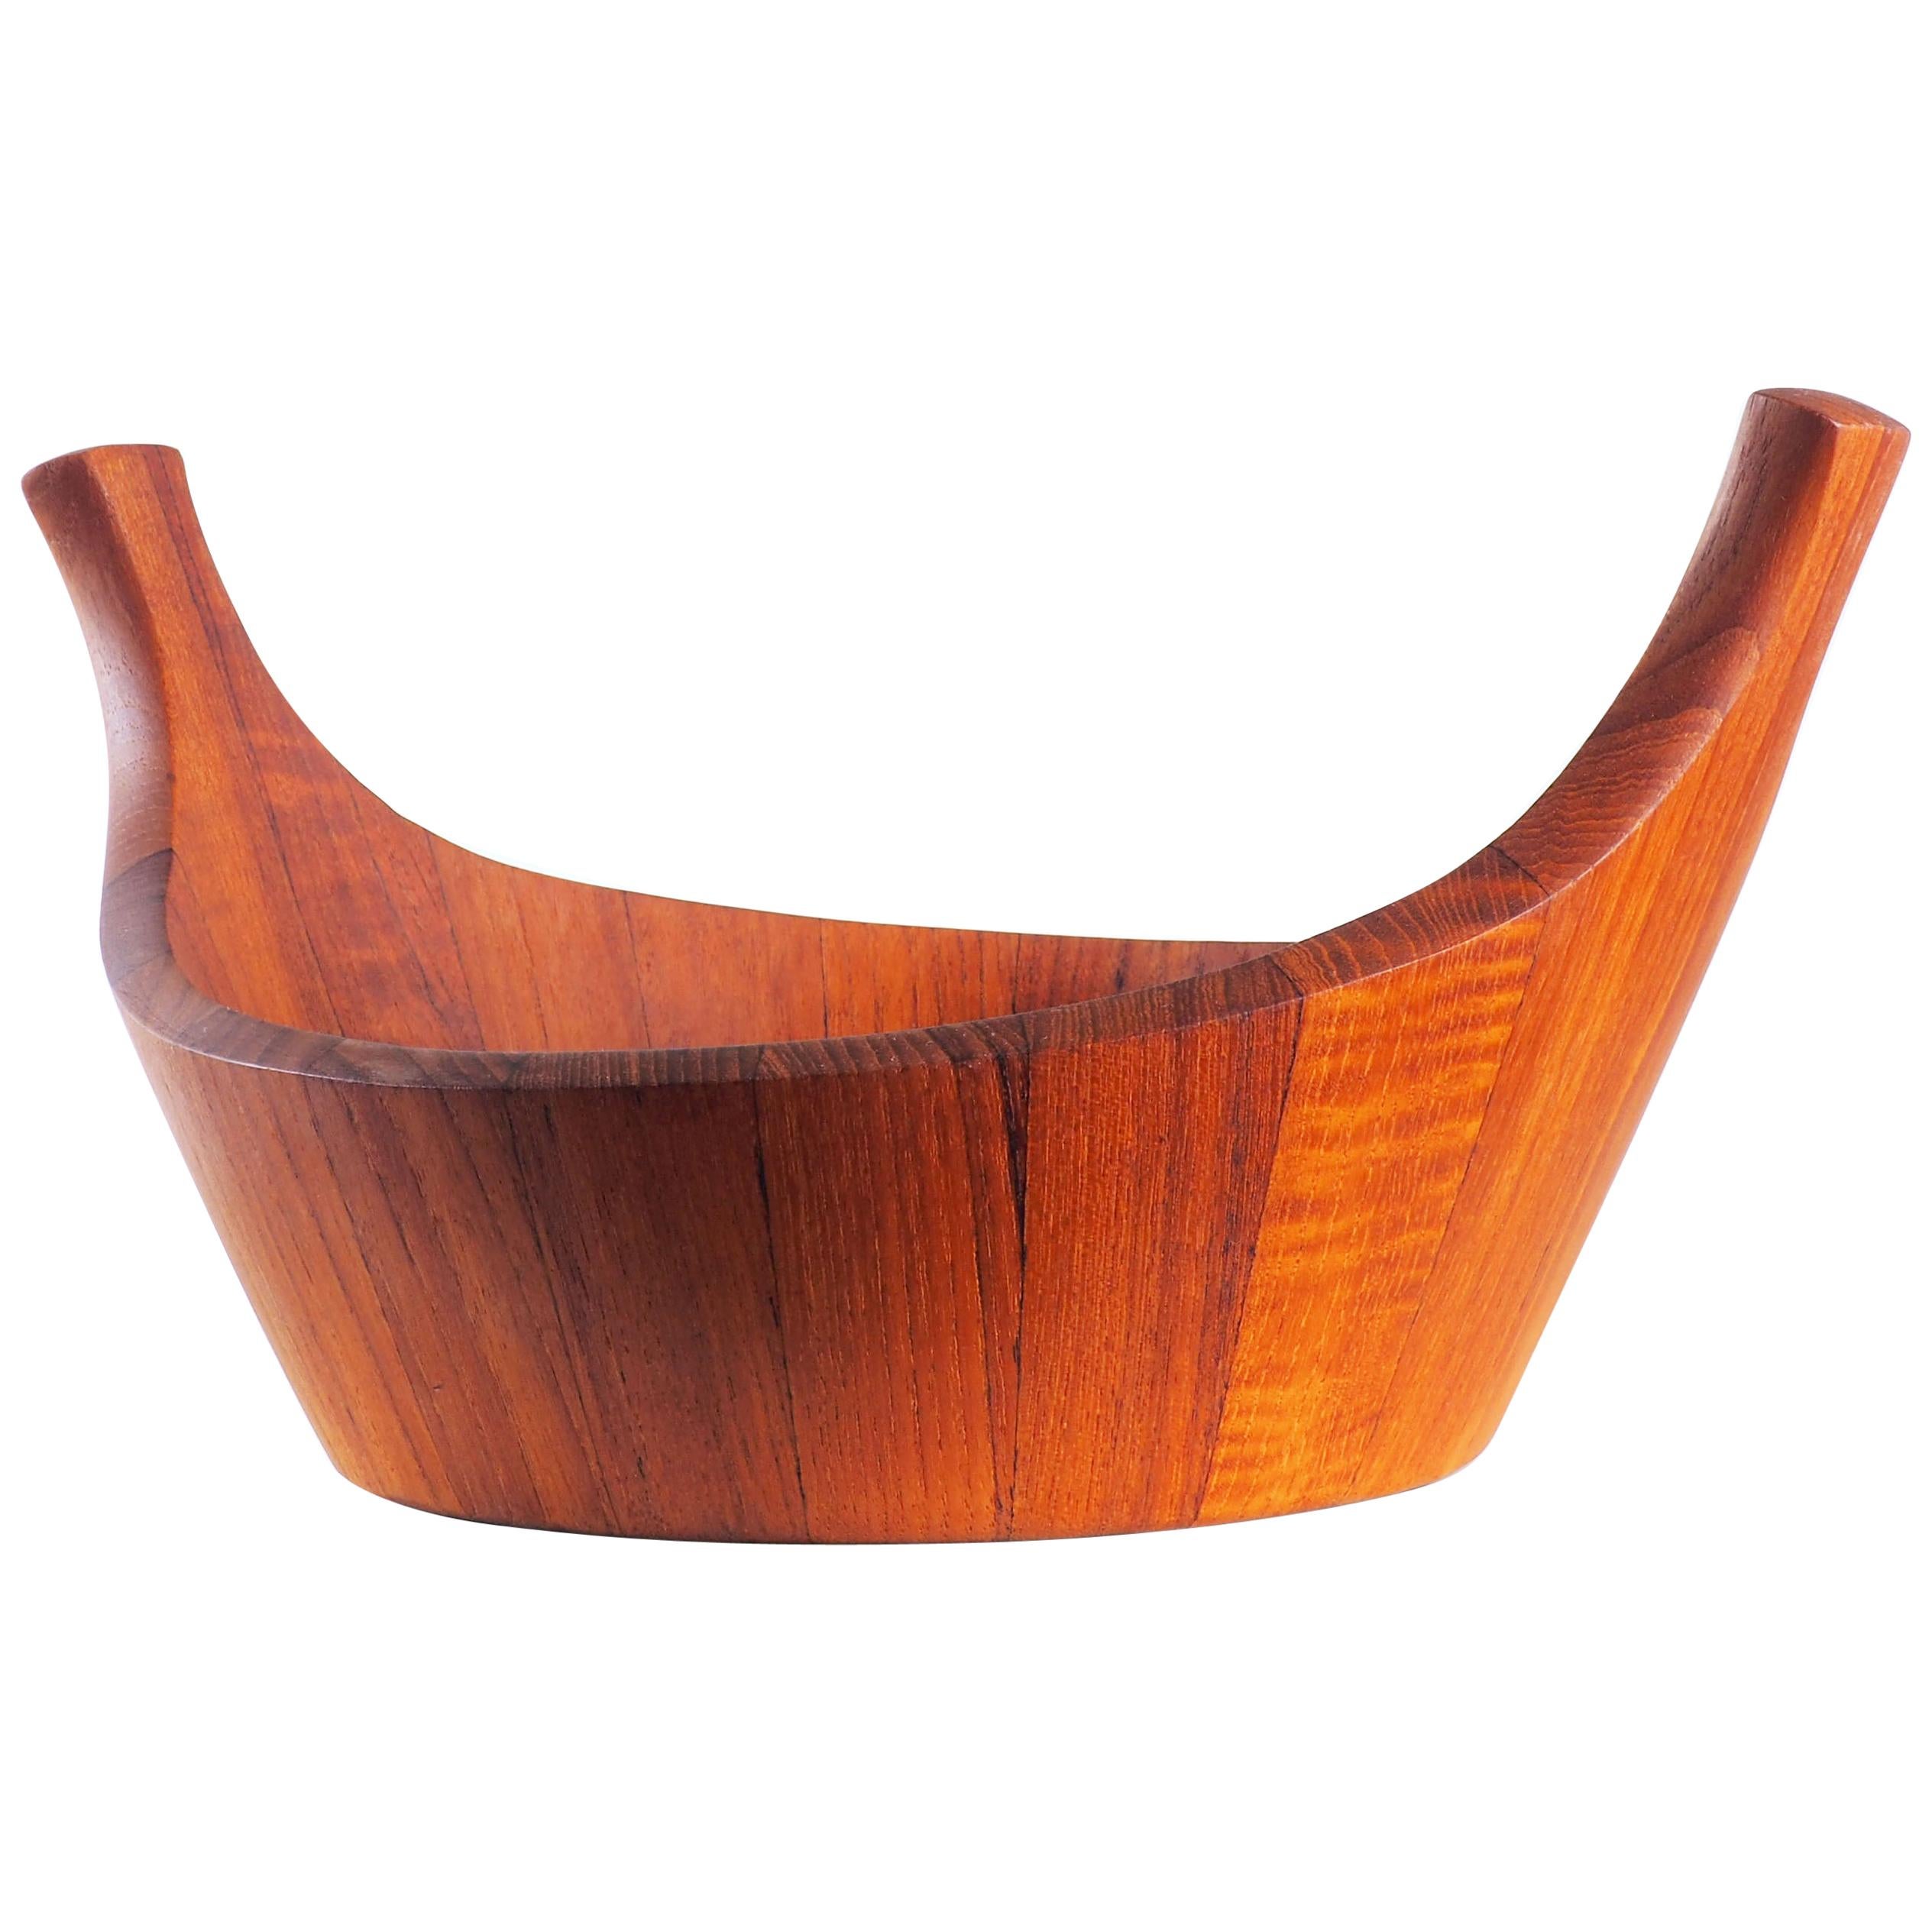 Staved Teak Bowl by the Danish designer Jens Harald Quistgaard For Sale